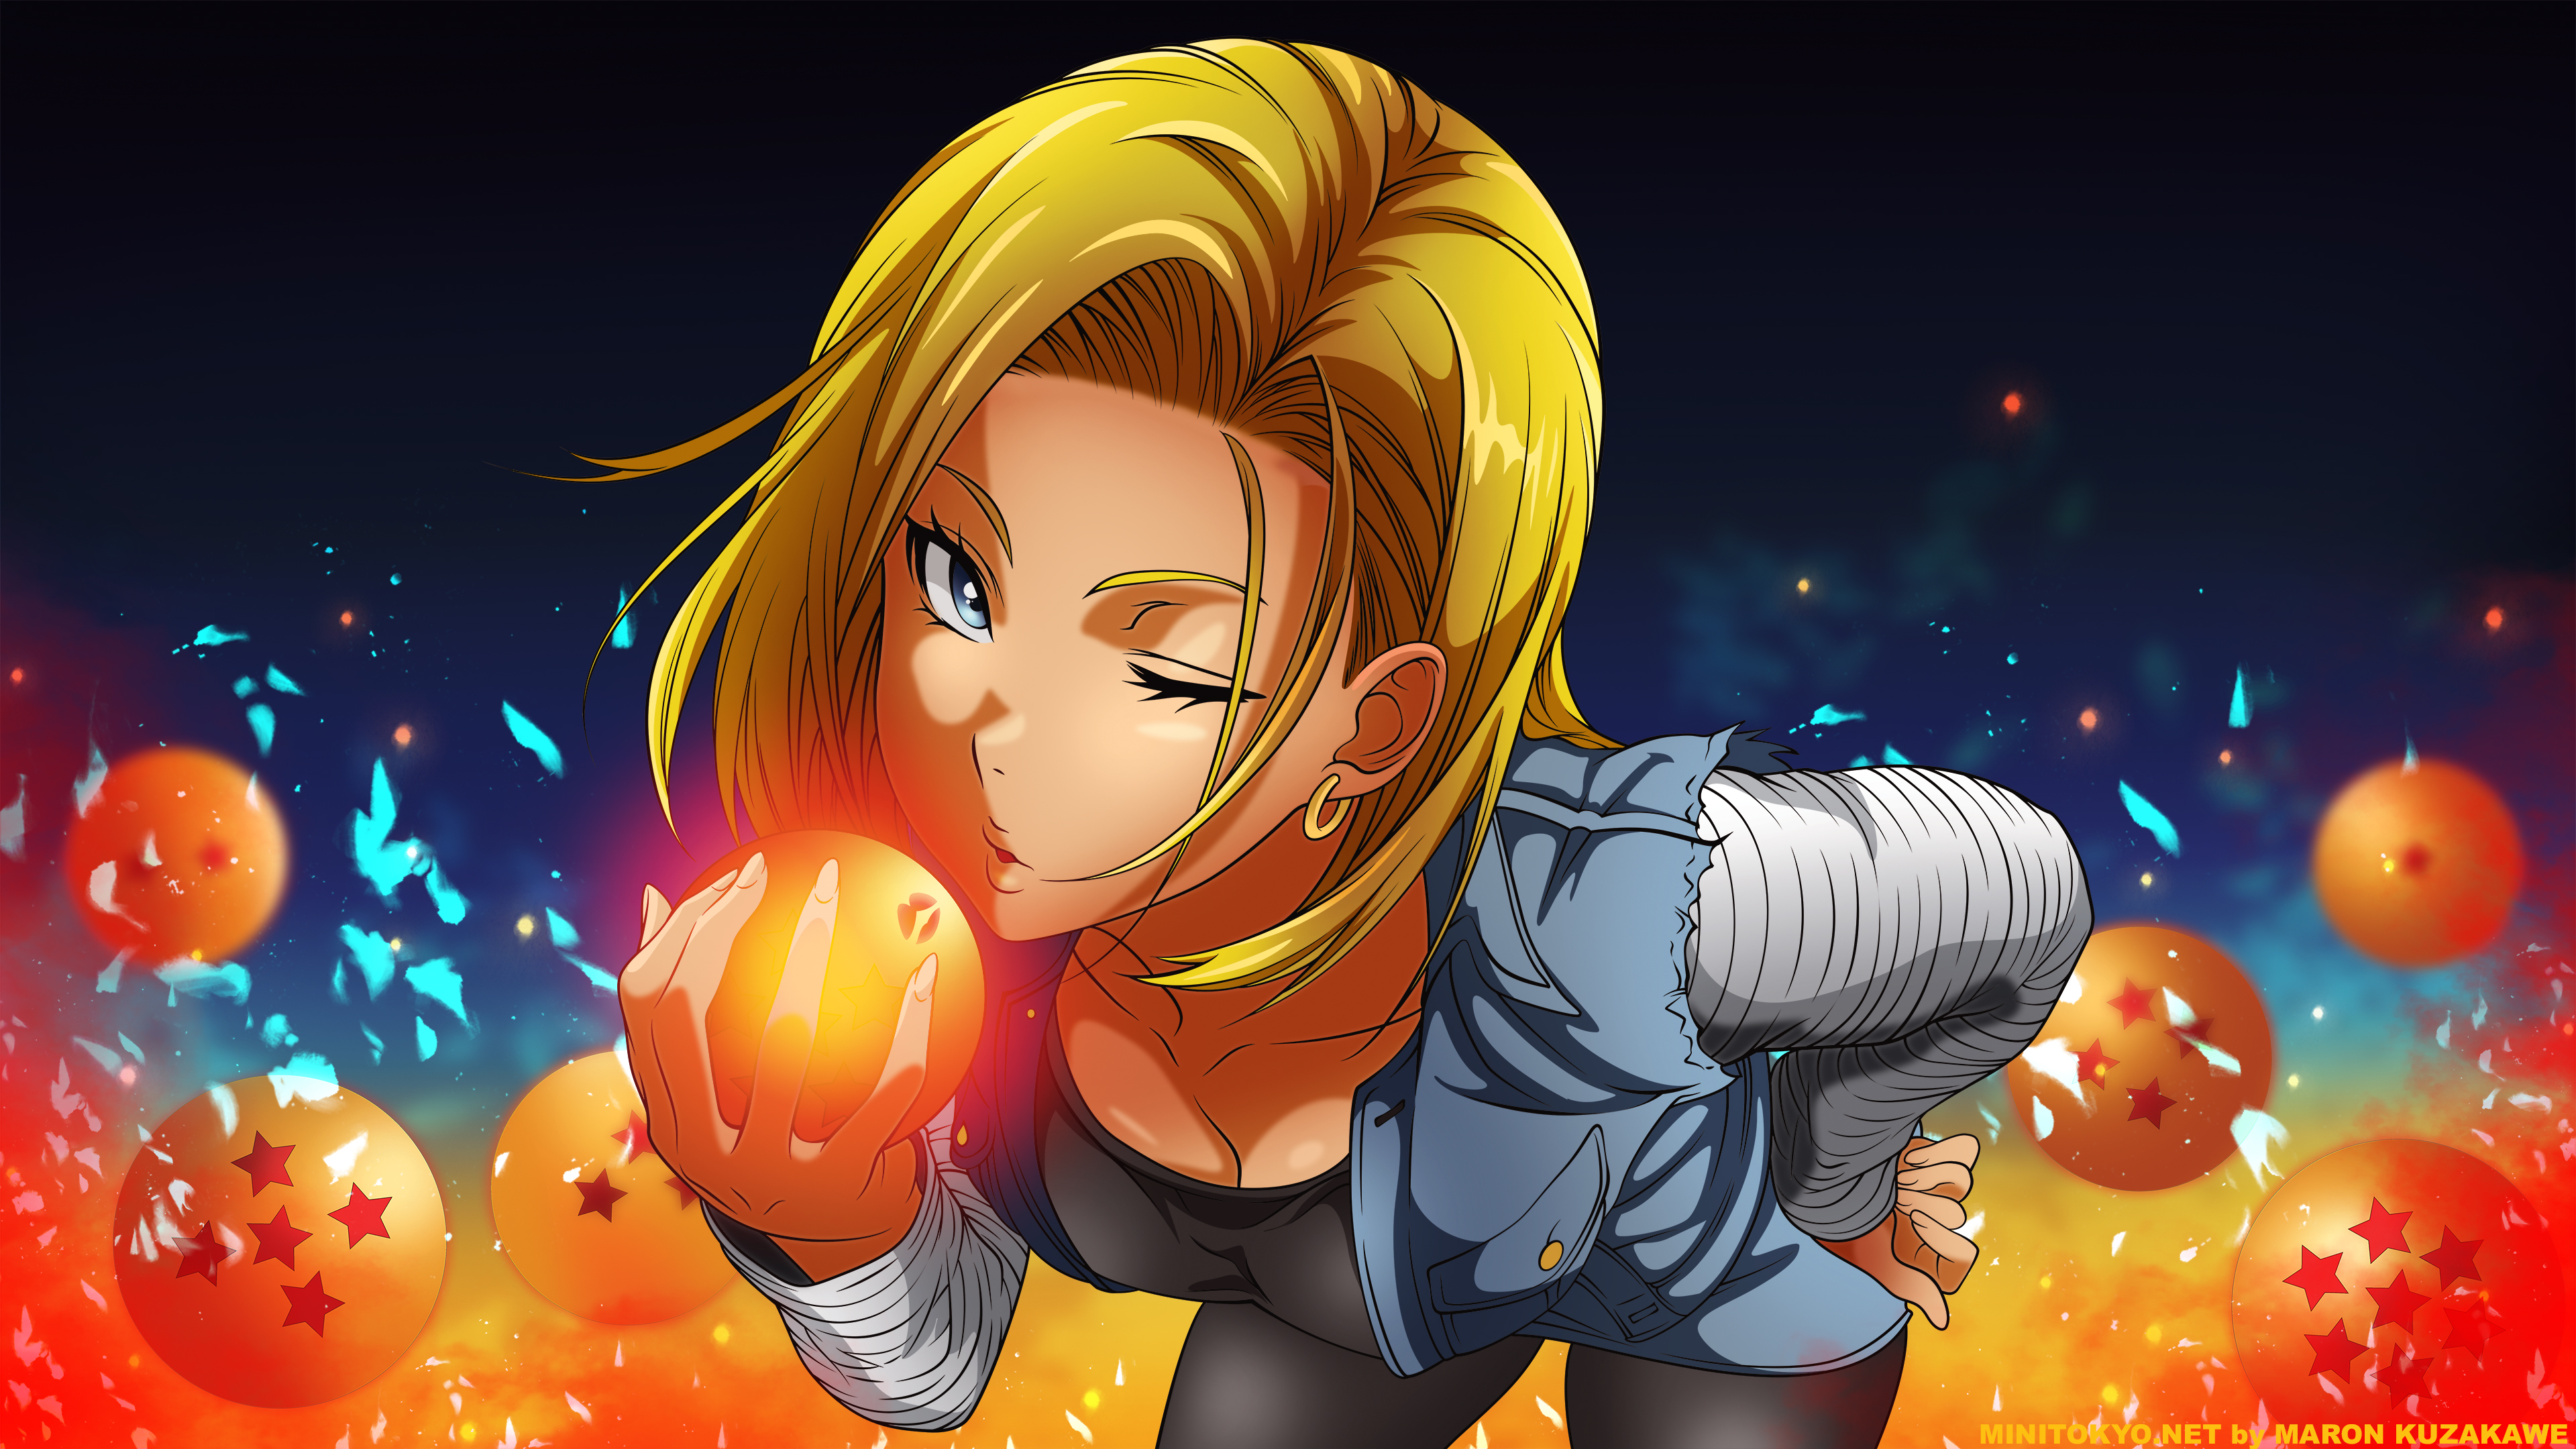 60+ Android 18 (Dragon Ball) Fondos de pantalla HD y Fondos de Escritorio